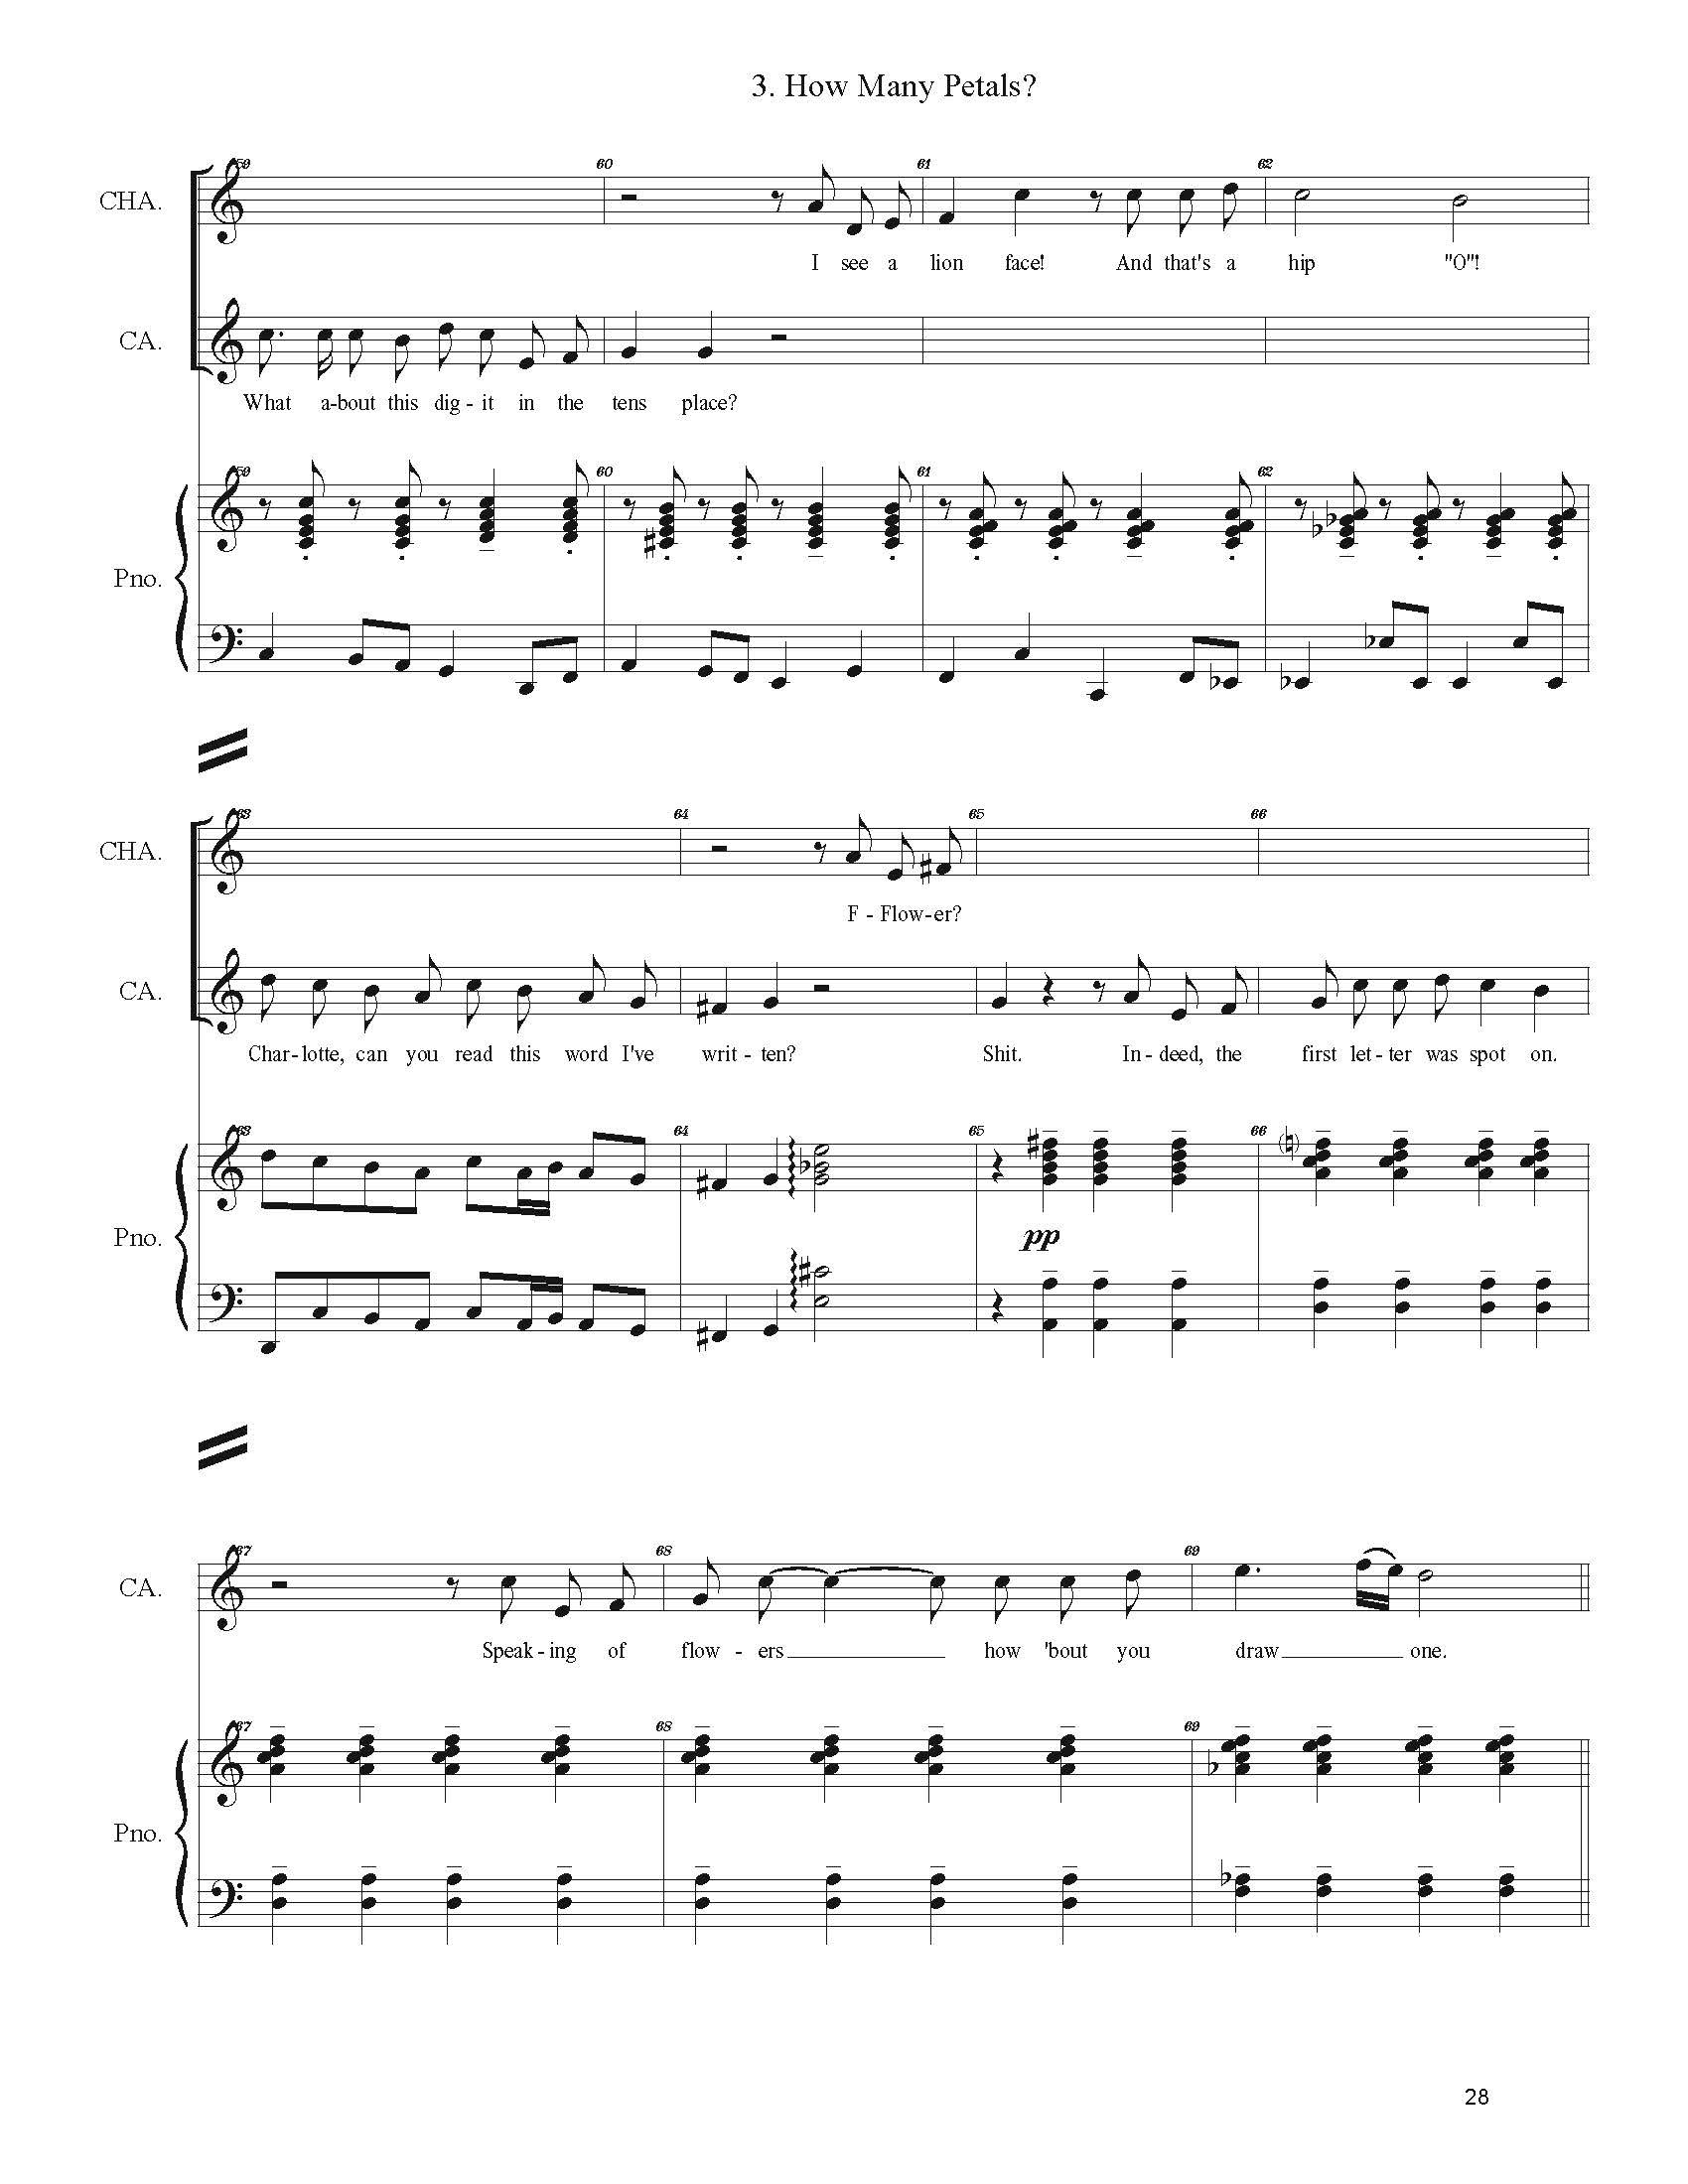 FULL PIANO VOCAL SCORE DRAFT 1 - Score_Page_028.jpg